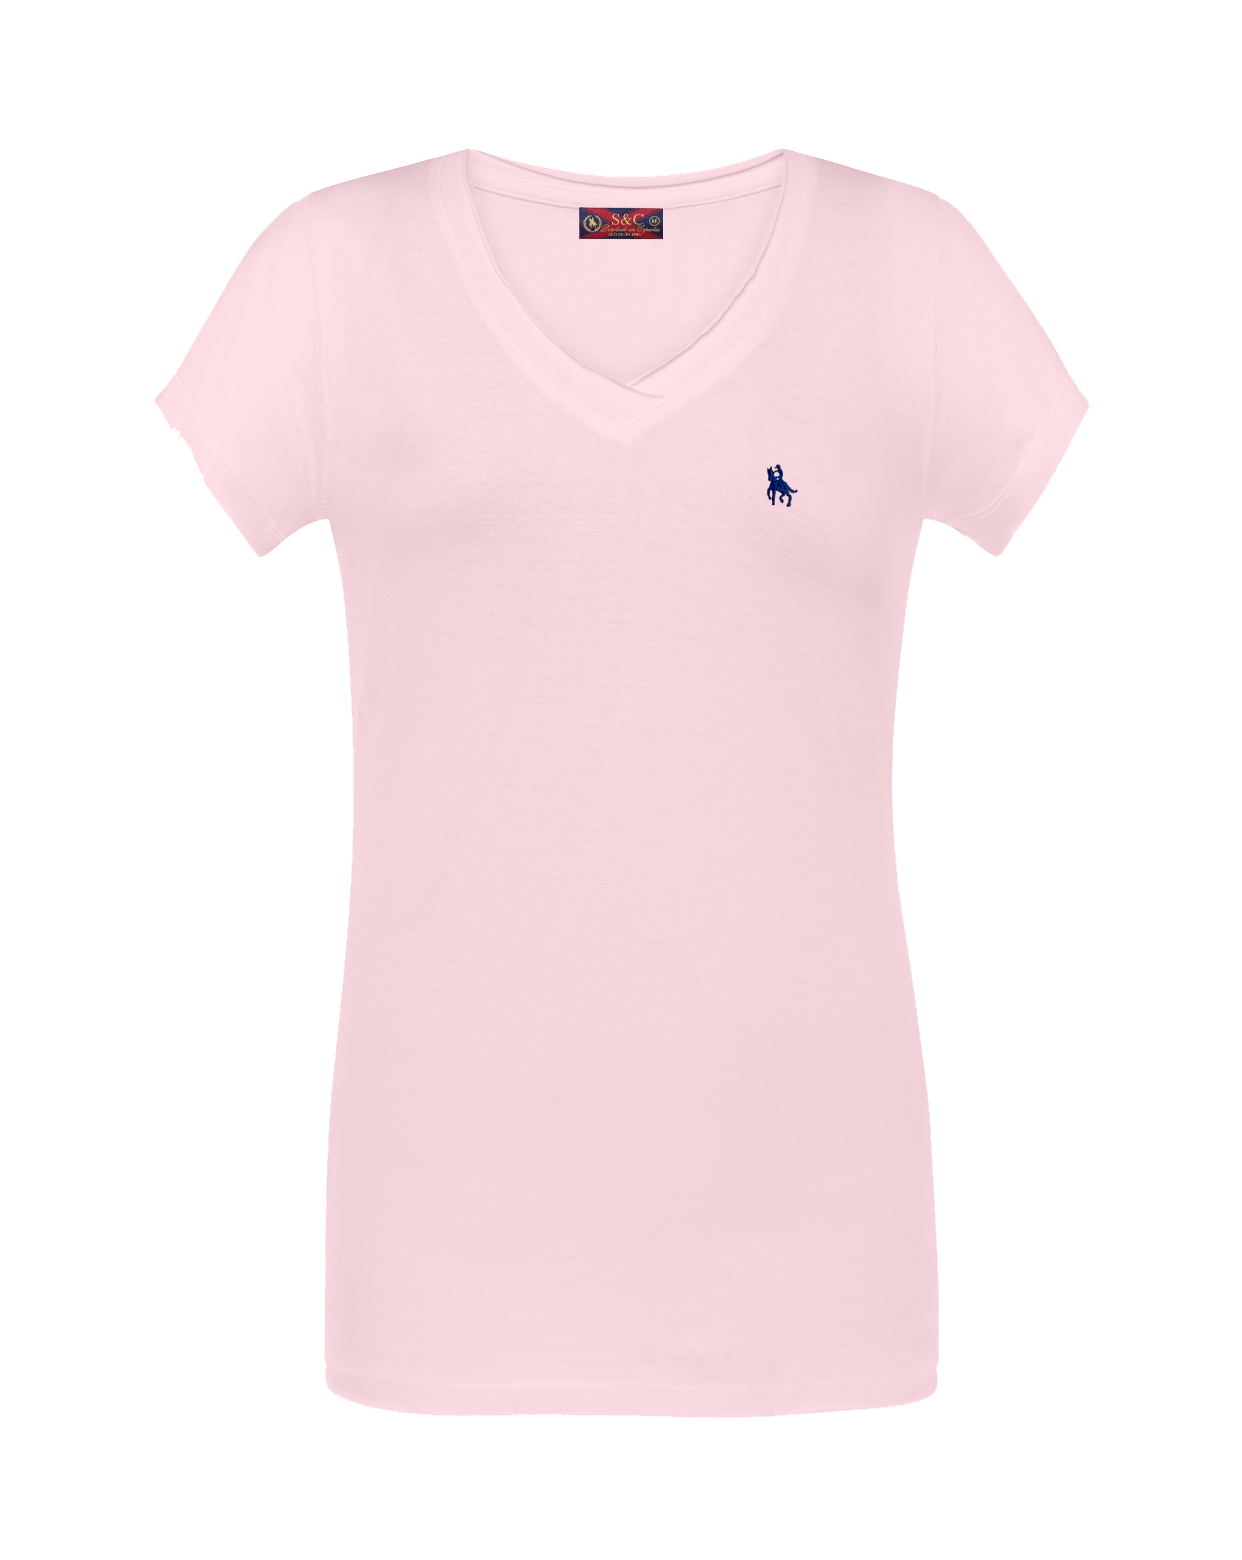 Camiseta pico manga corta rosa